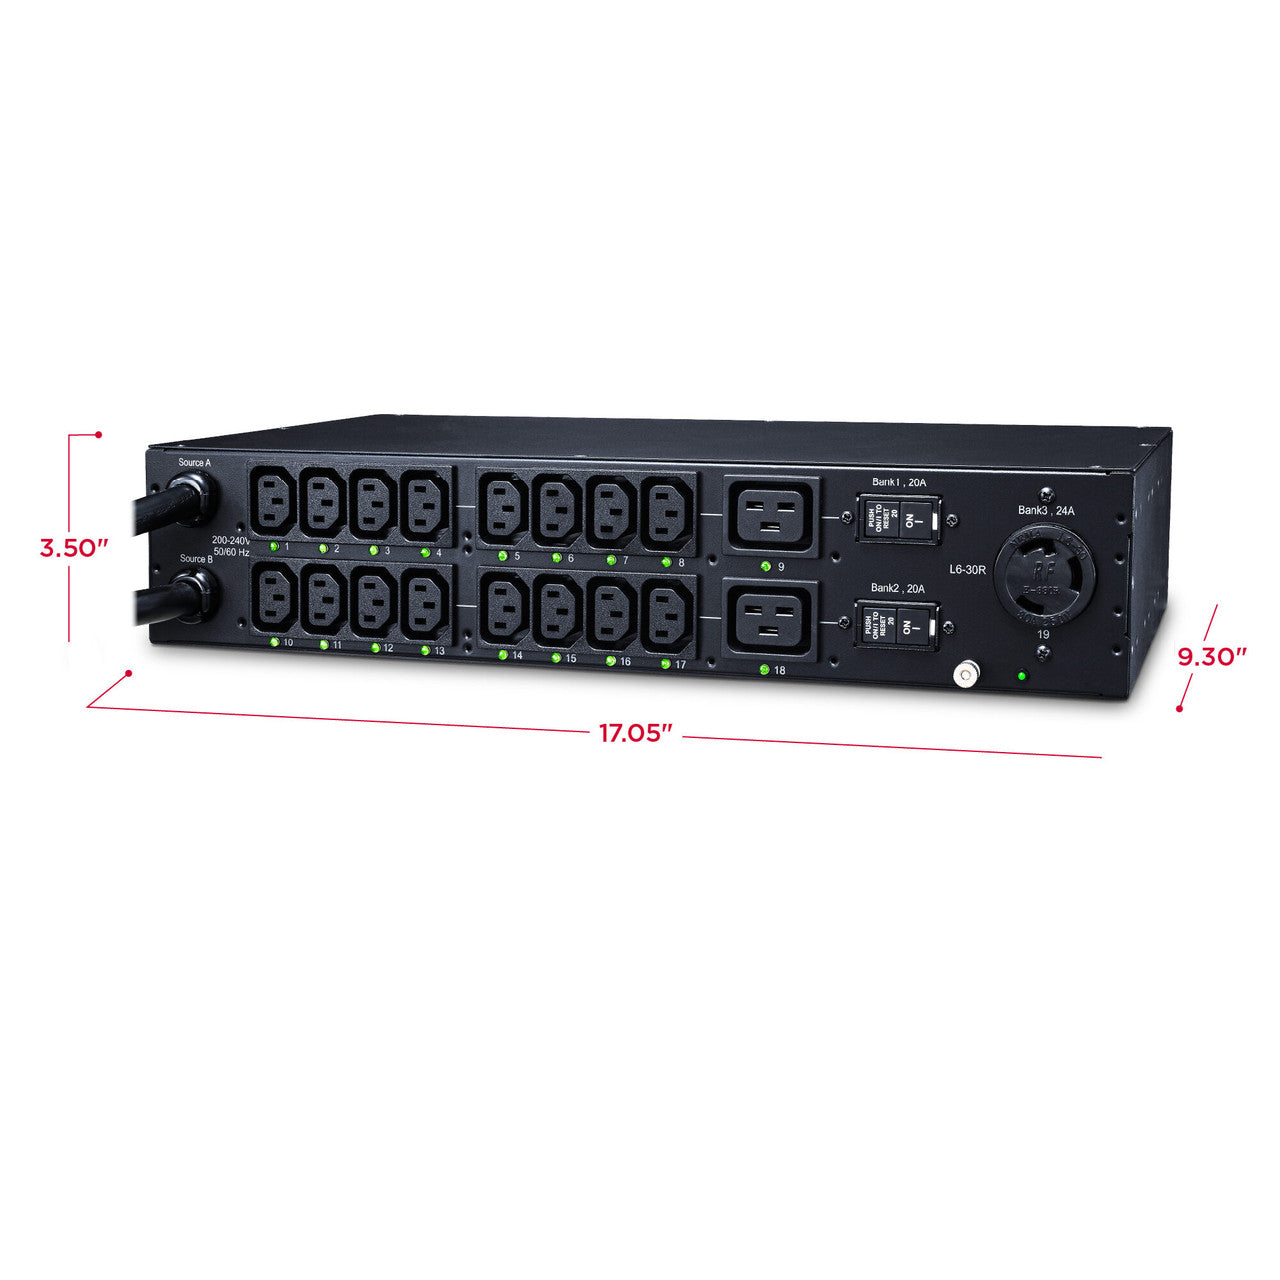 CyberPower PDU30SWHVT19ATNET 30A (Derated to 24A), 200 V - 240 V, 50/60Hz, 2x NEMA L6-30P plugs